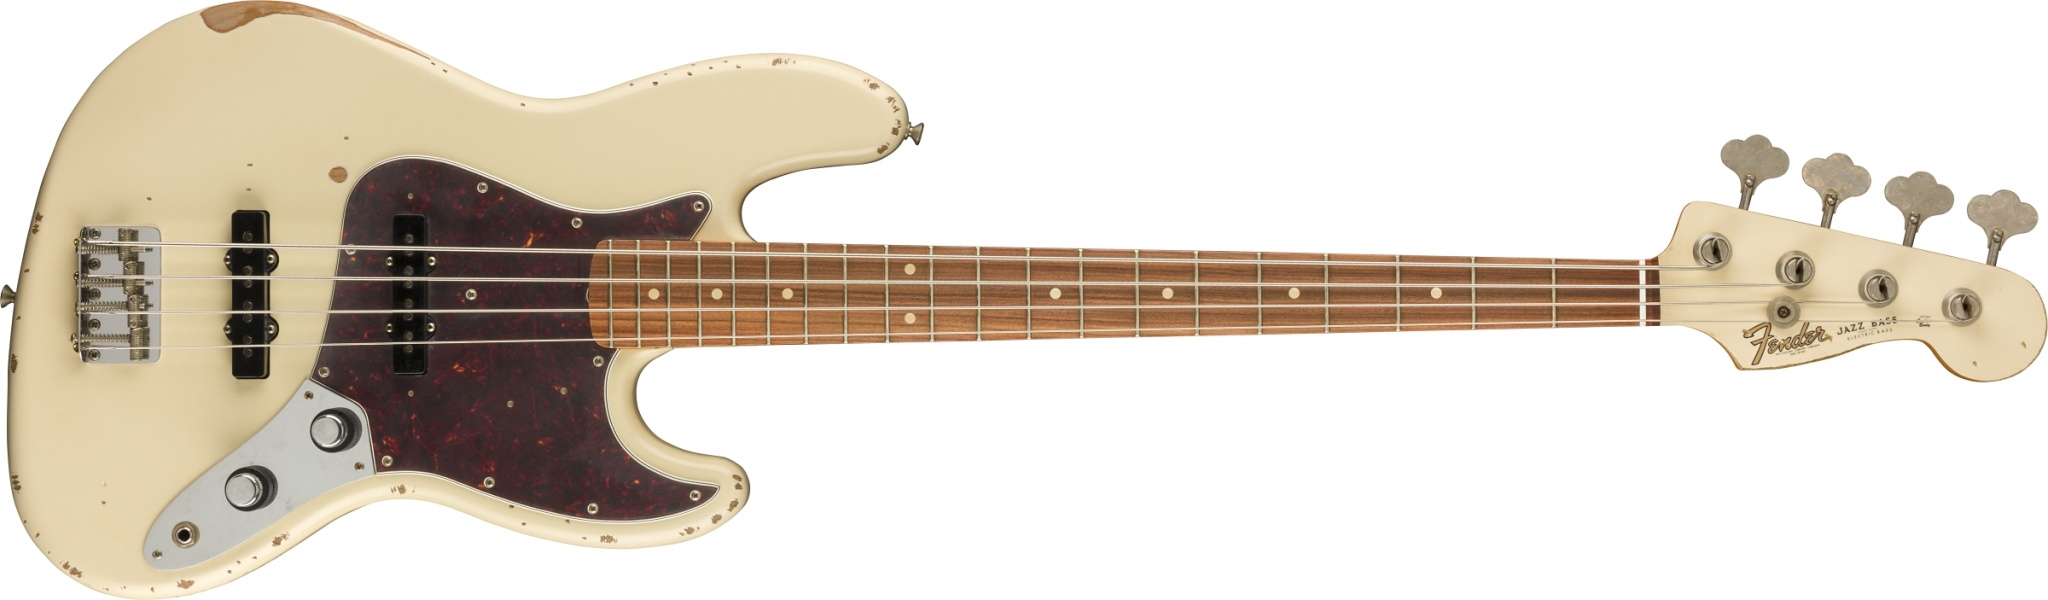 Fender Jazz Bass Roadworn 60'S pao ferro olympic white